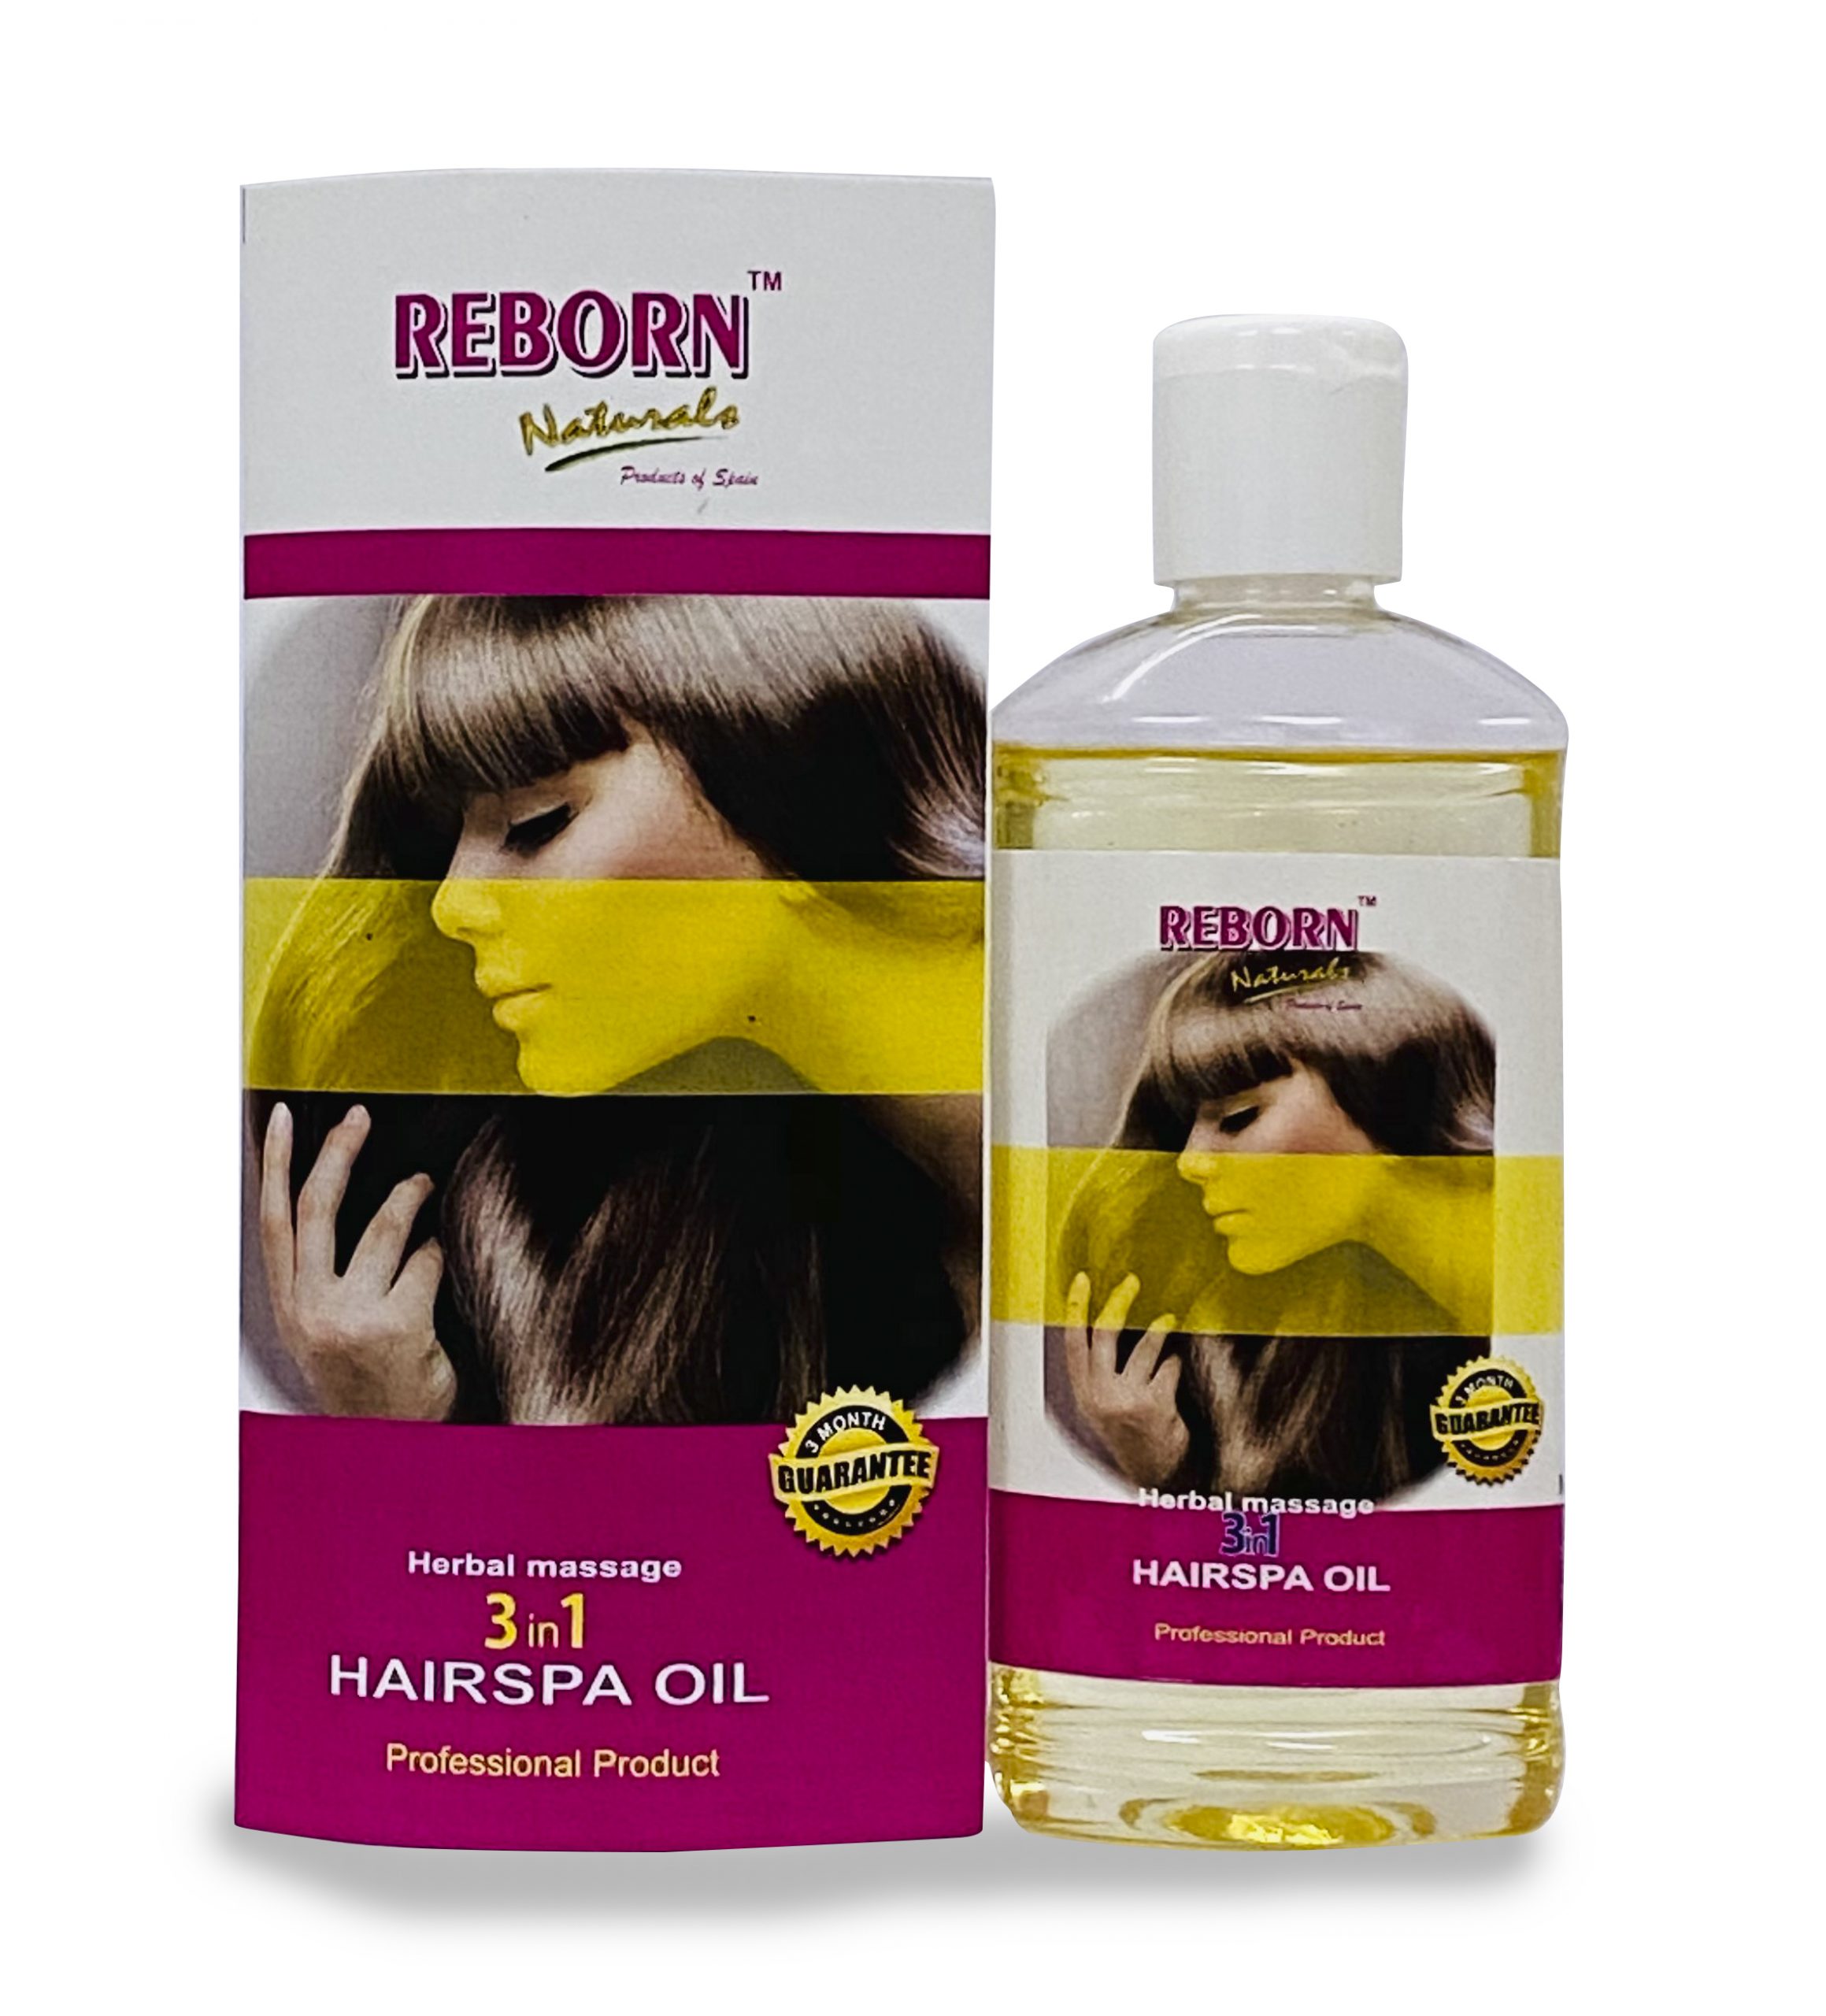 Hairspa Oil – Reborn Naturals